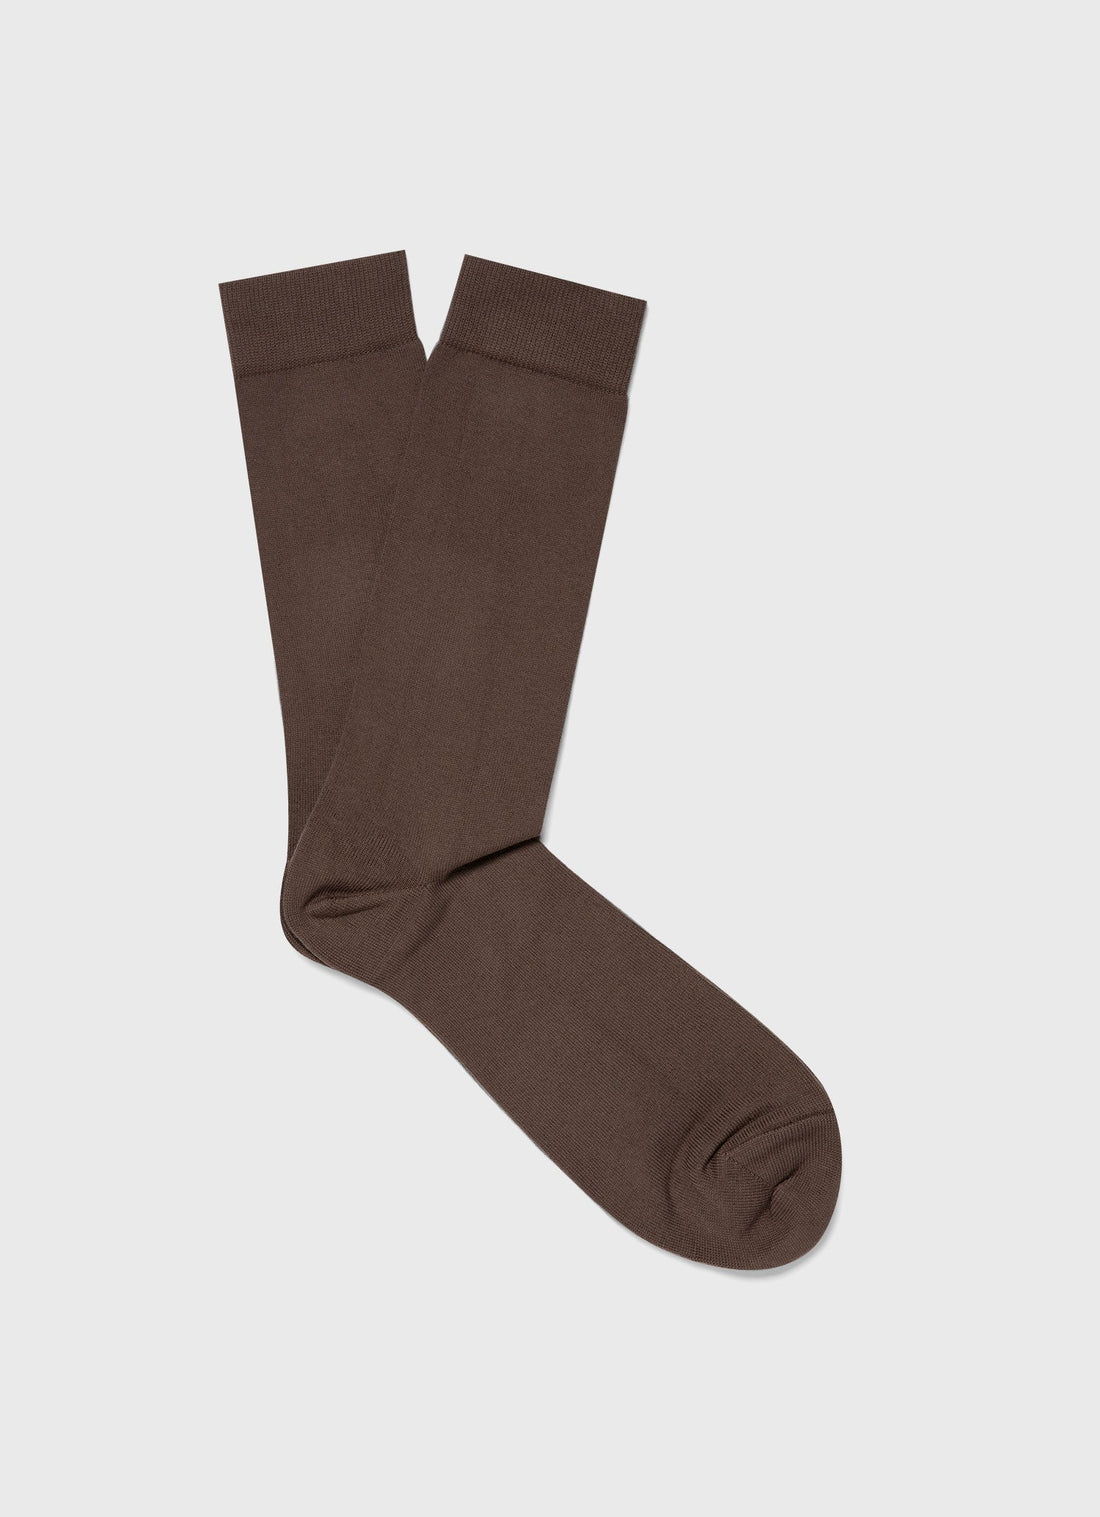 Men's Cotton Socks in Cedar